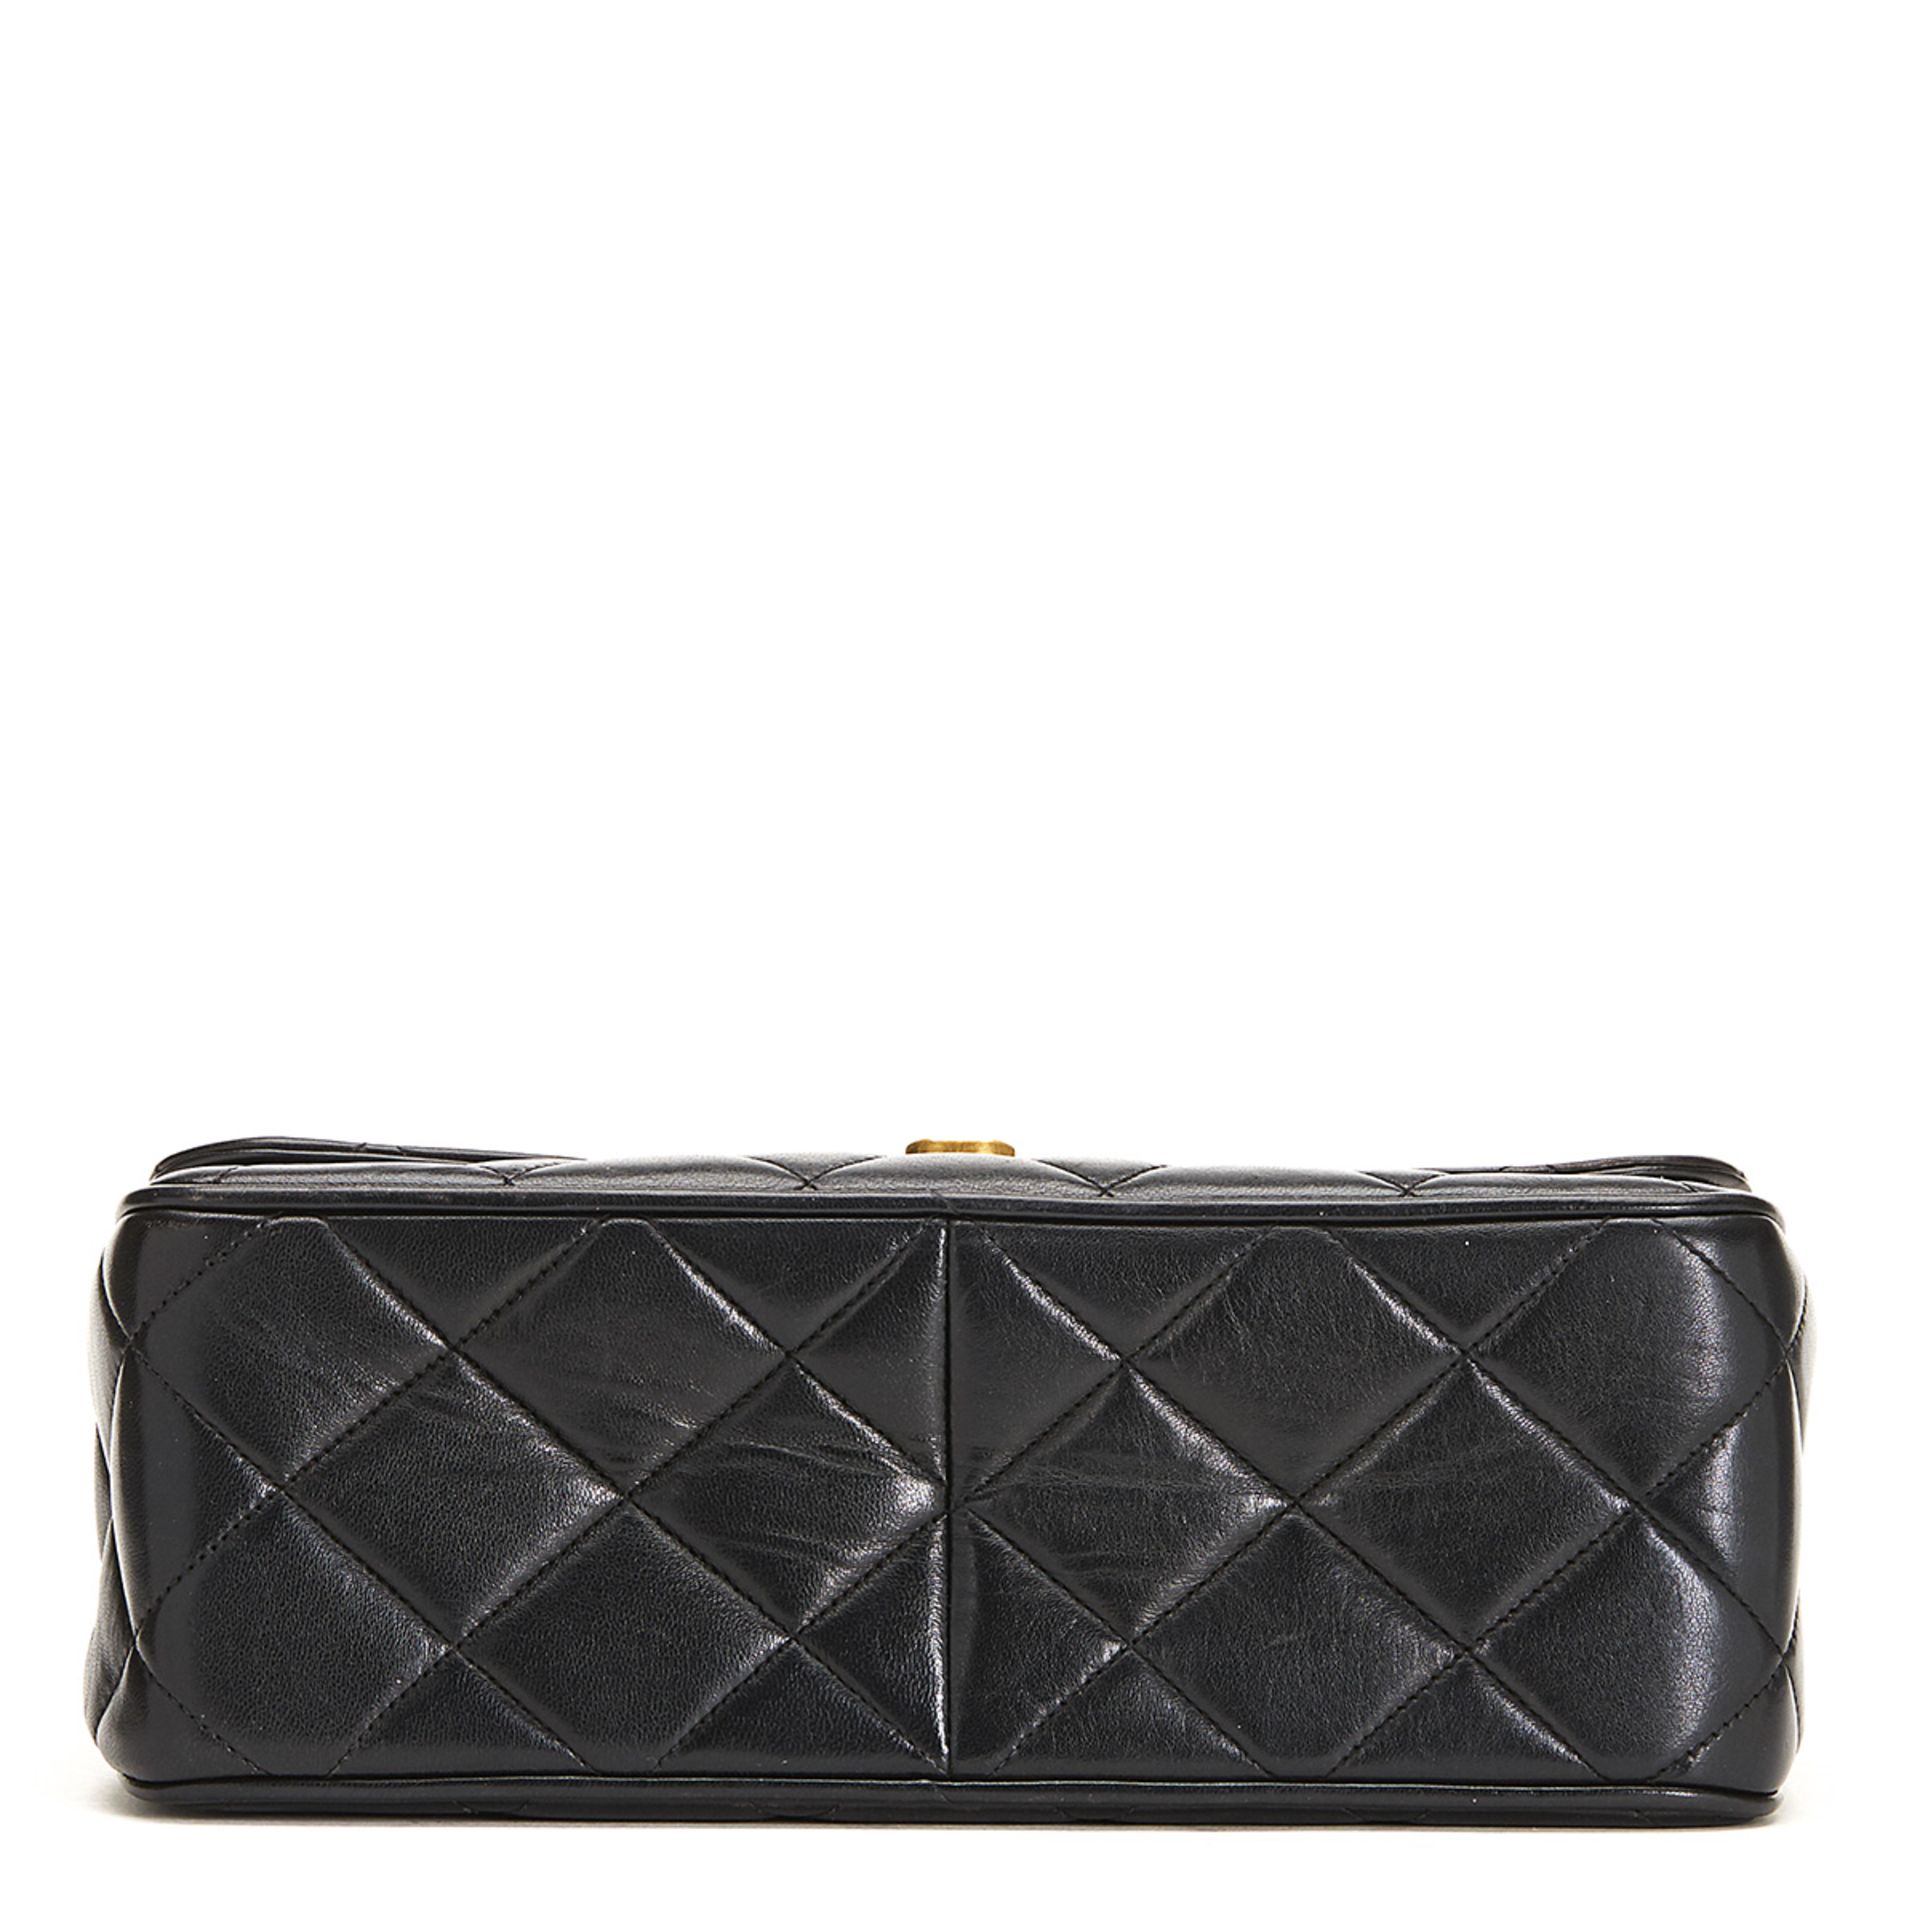 Chanel, Single Flap Bag - Image 5 of 10